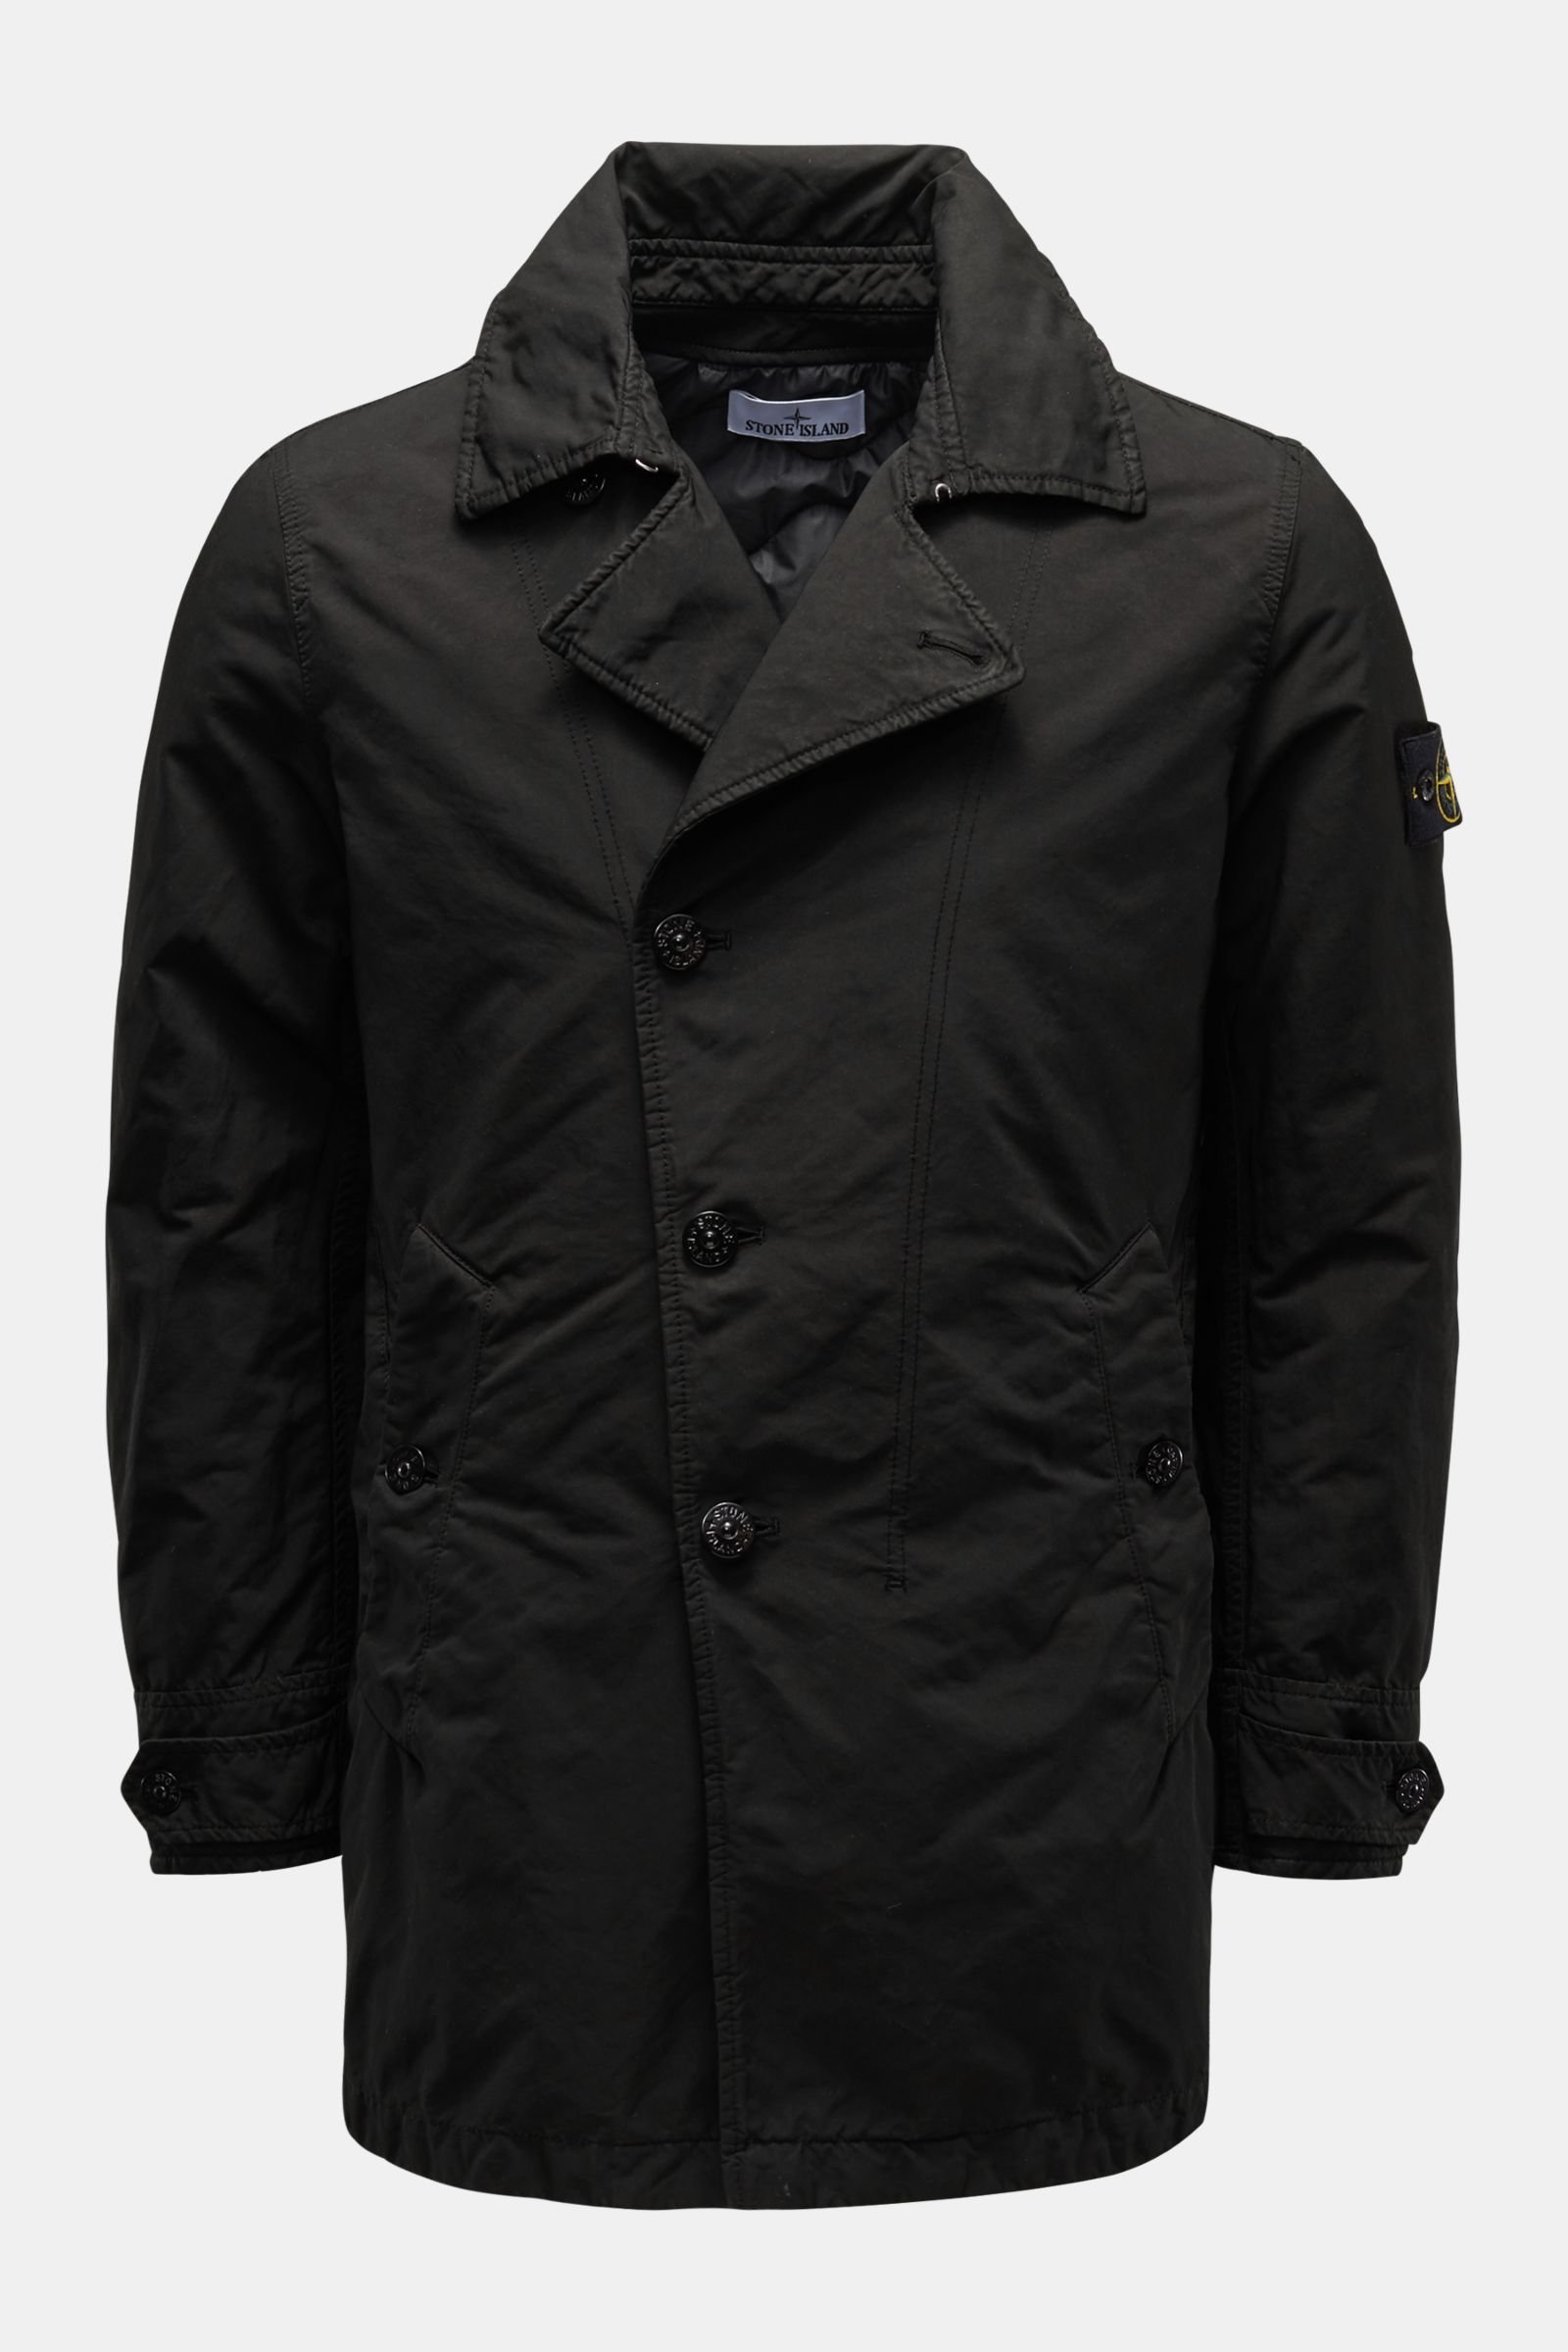 Jacket 'David-TC with Primaloft Insulation Technology' black